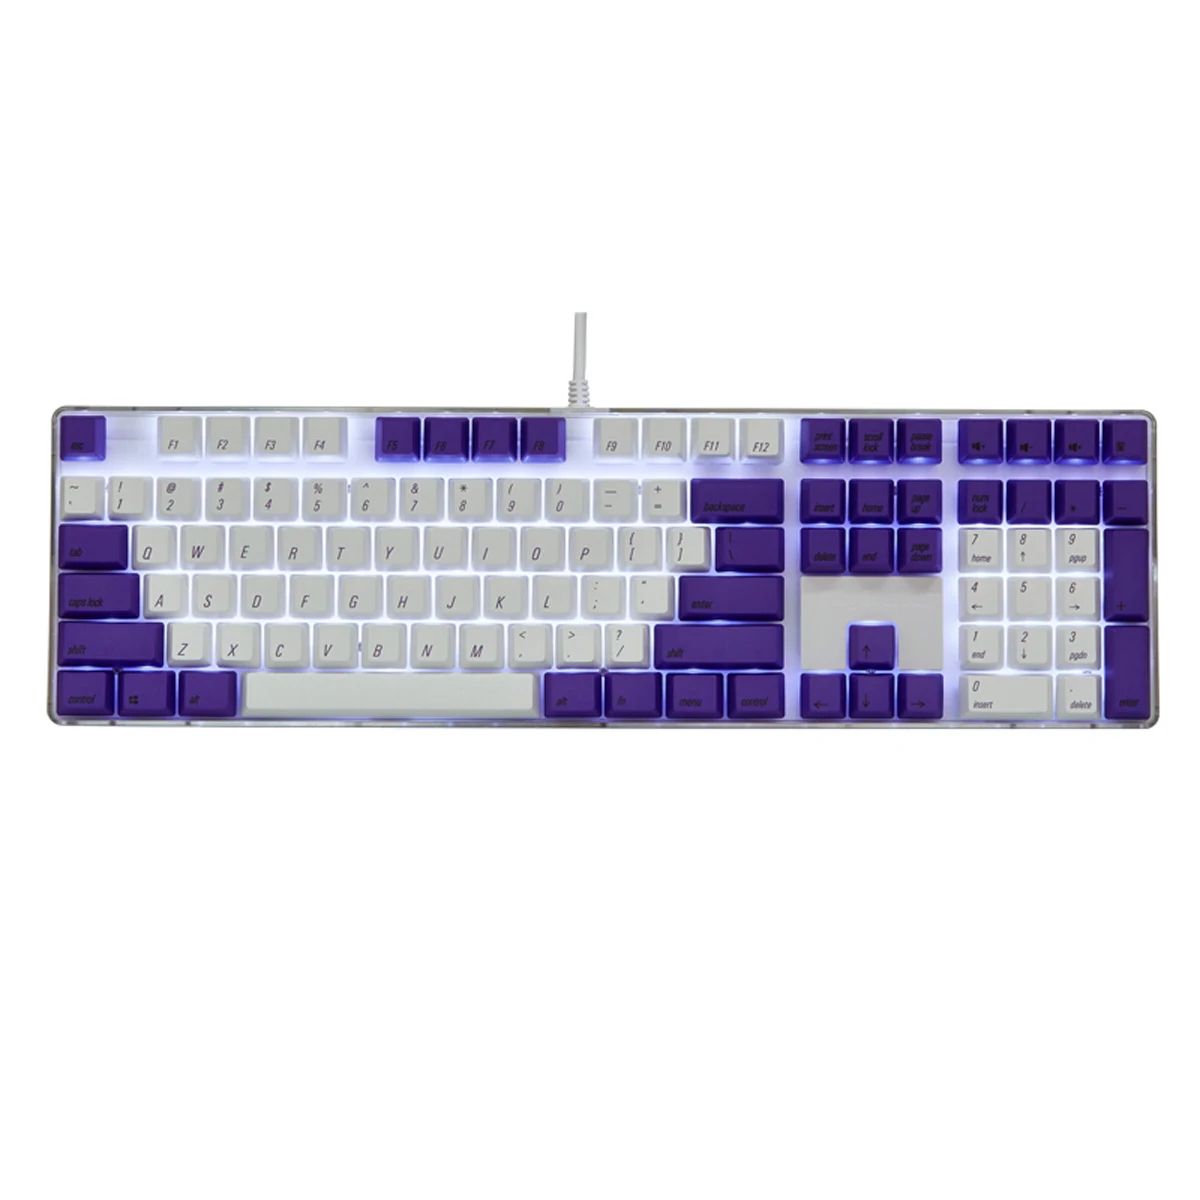 

Gaming Keycap-Magicforce 108 Key UV-Light Color Dye-sub PBT Keycaps Keycap Set for Mechanical Keyboard Keycaps-Only